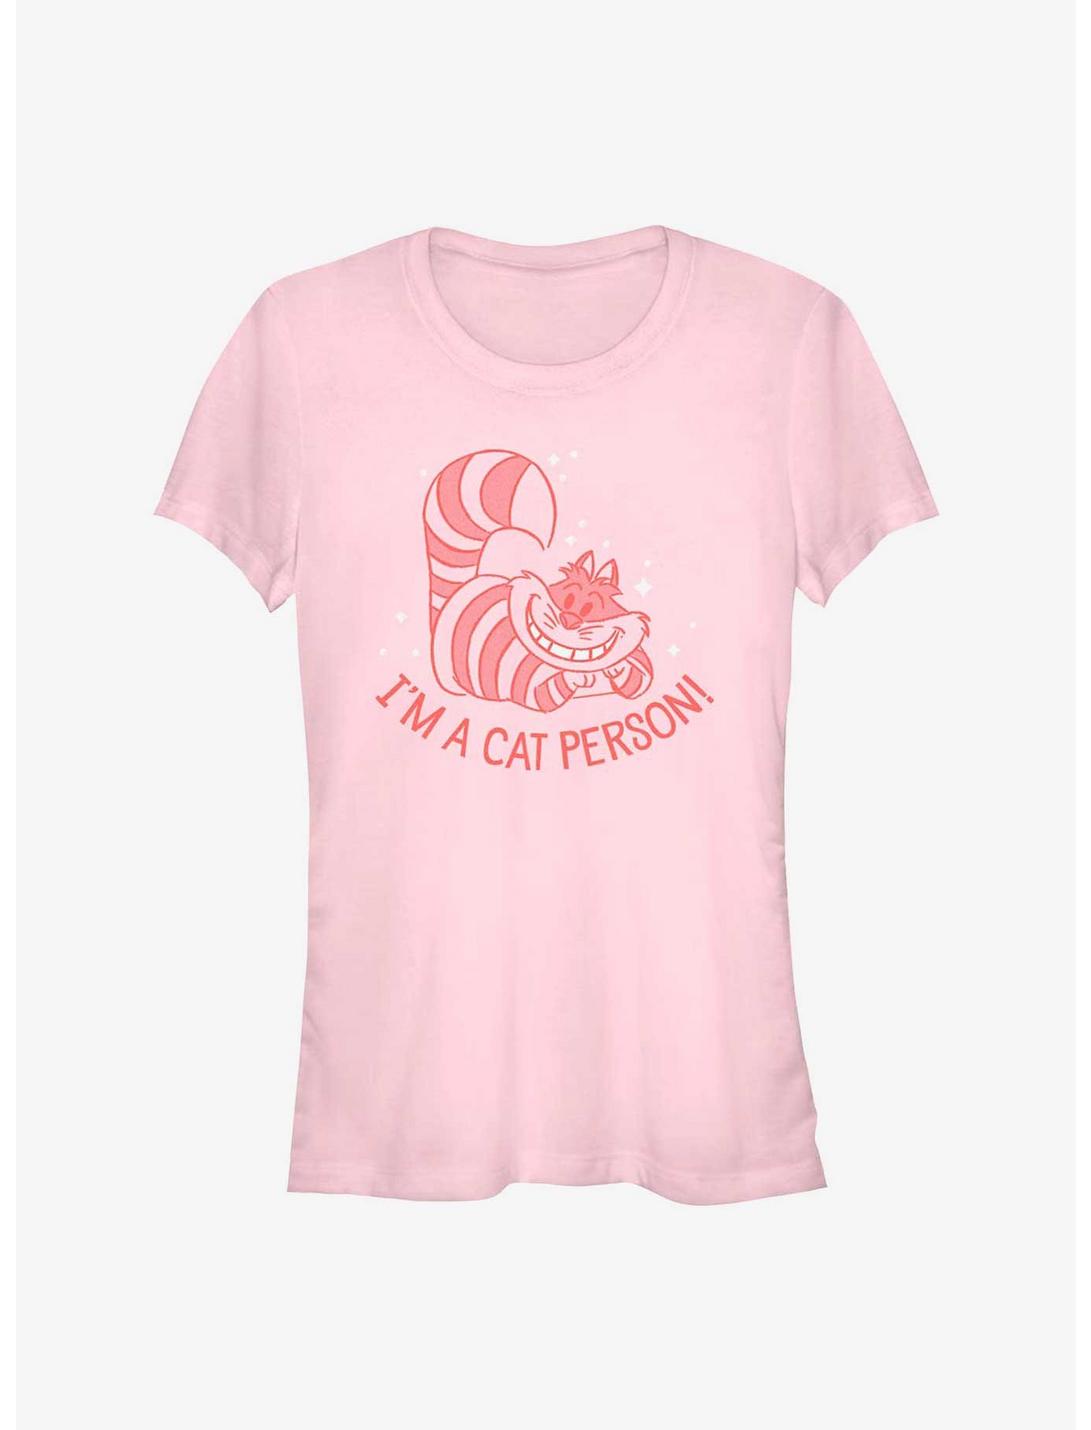 Disney Alice in Wonderland Cheshire Cat Person Girls T-Shirt, LIGHT PINK, hi-res